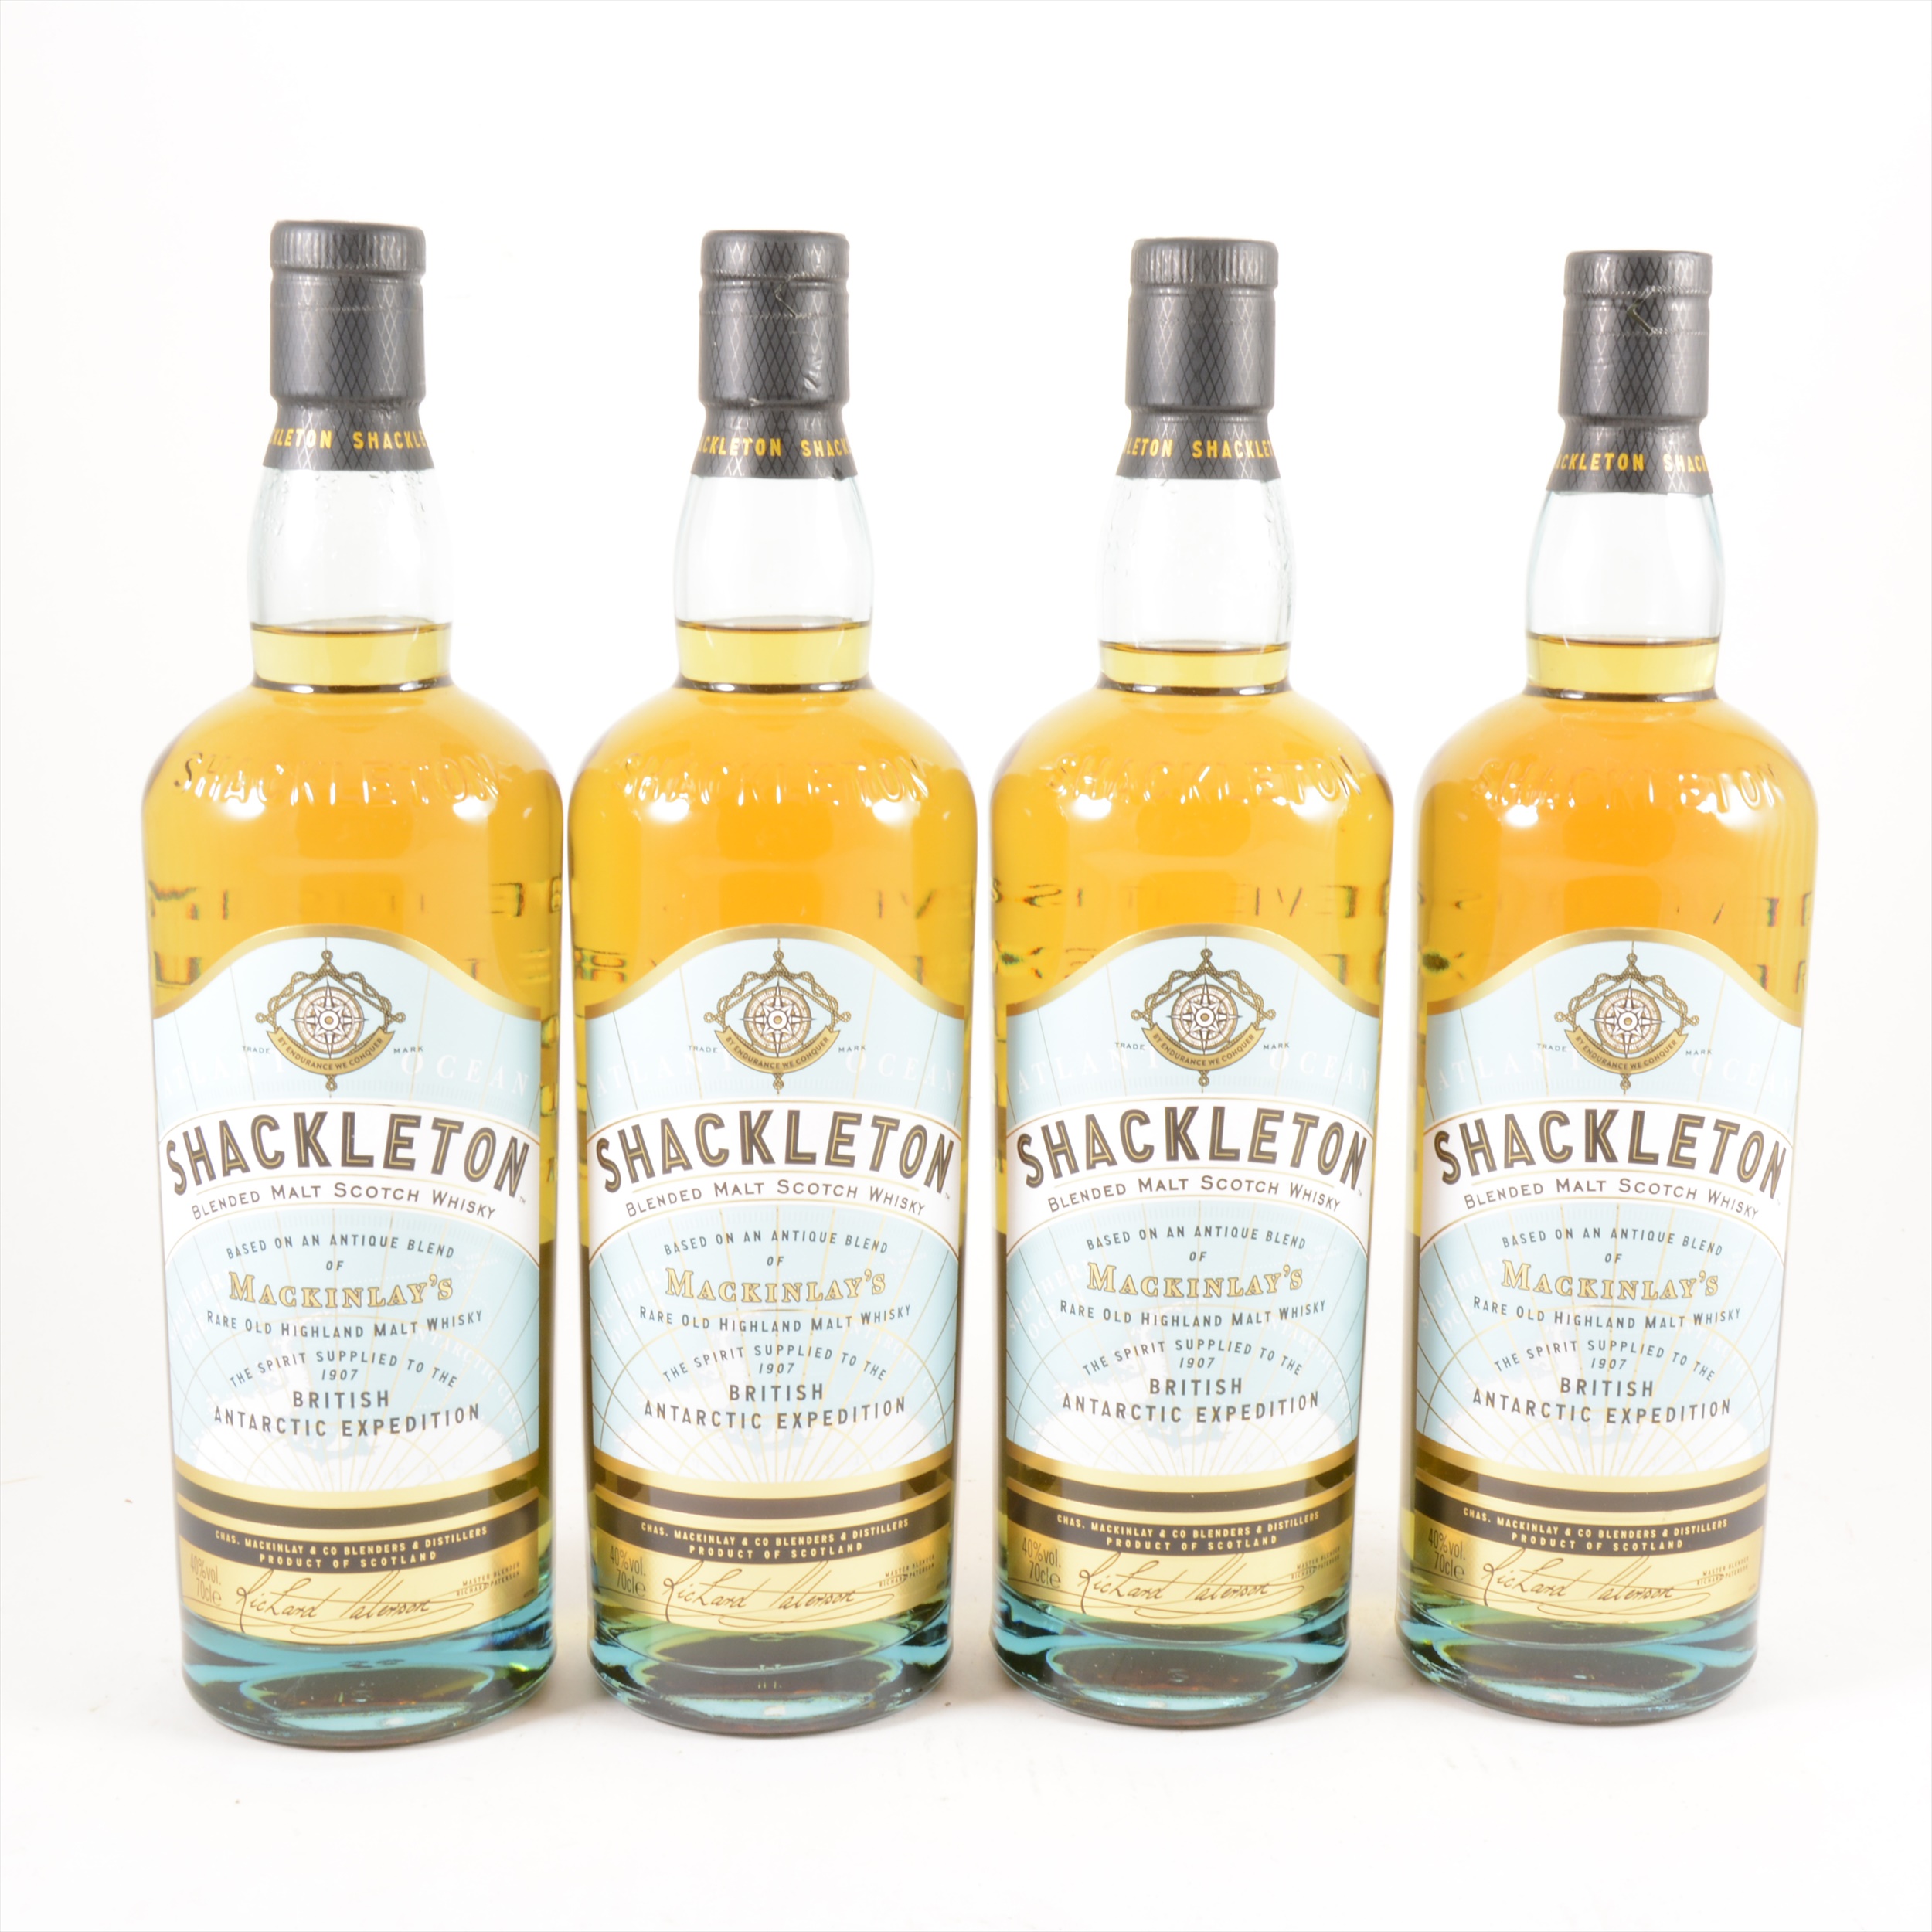 Shackleton виски. Mackinlay's old Scotch Whisky. Blended Malt. Mackinlay's old Scotch Whisky цена.